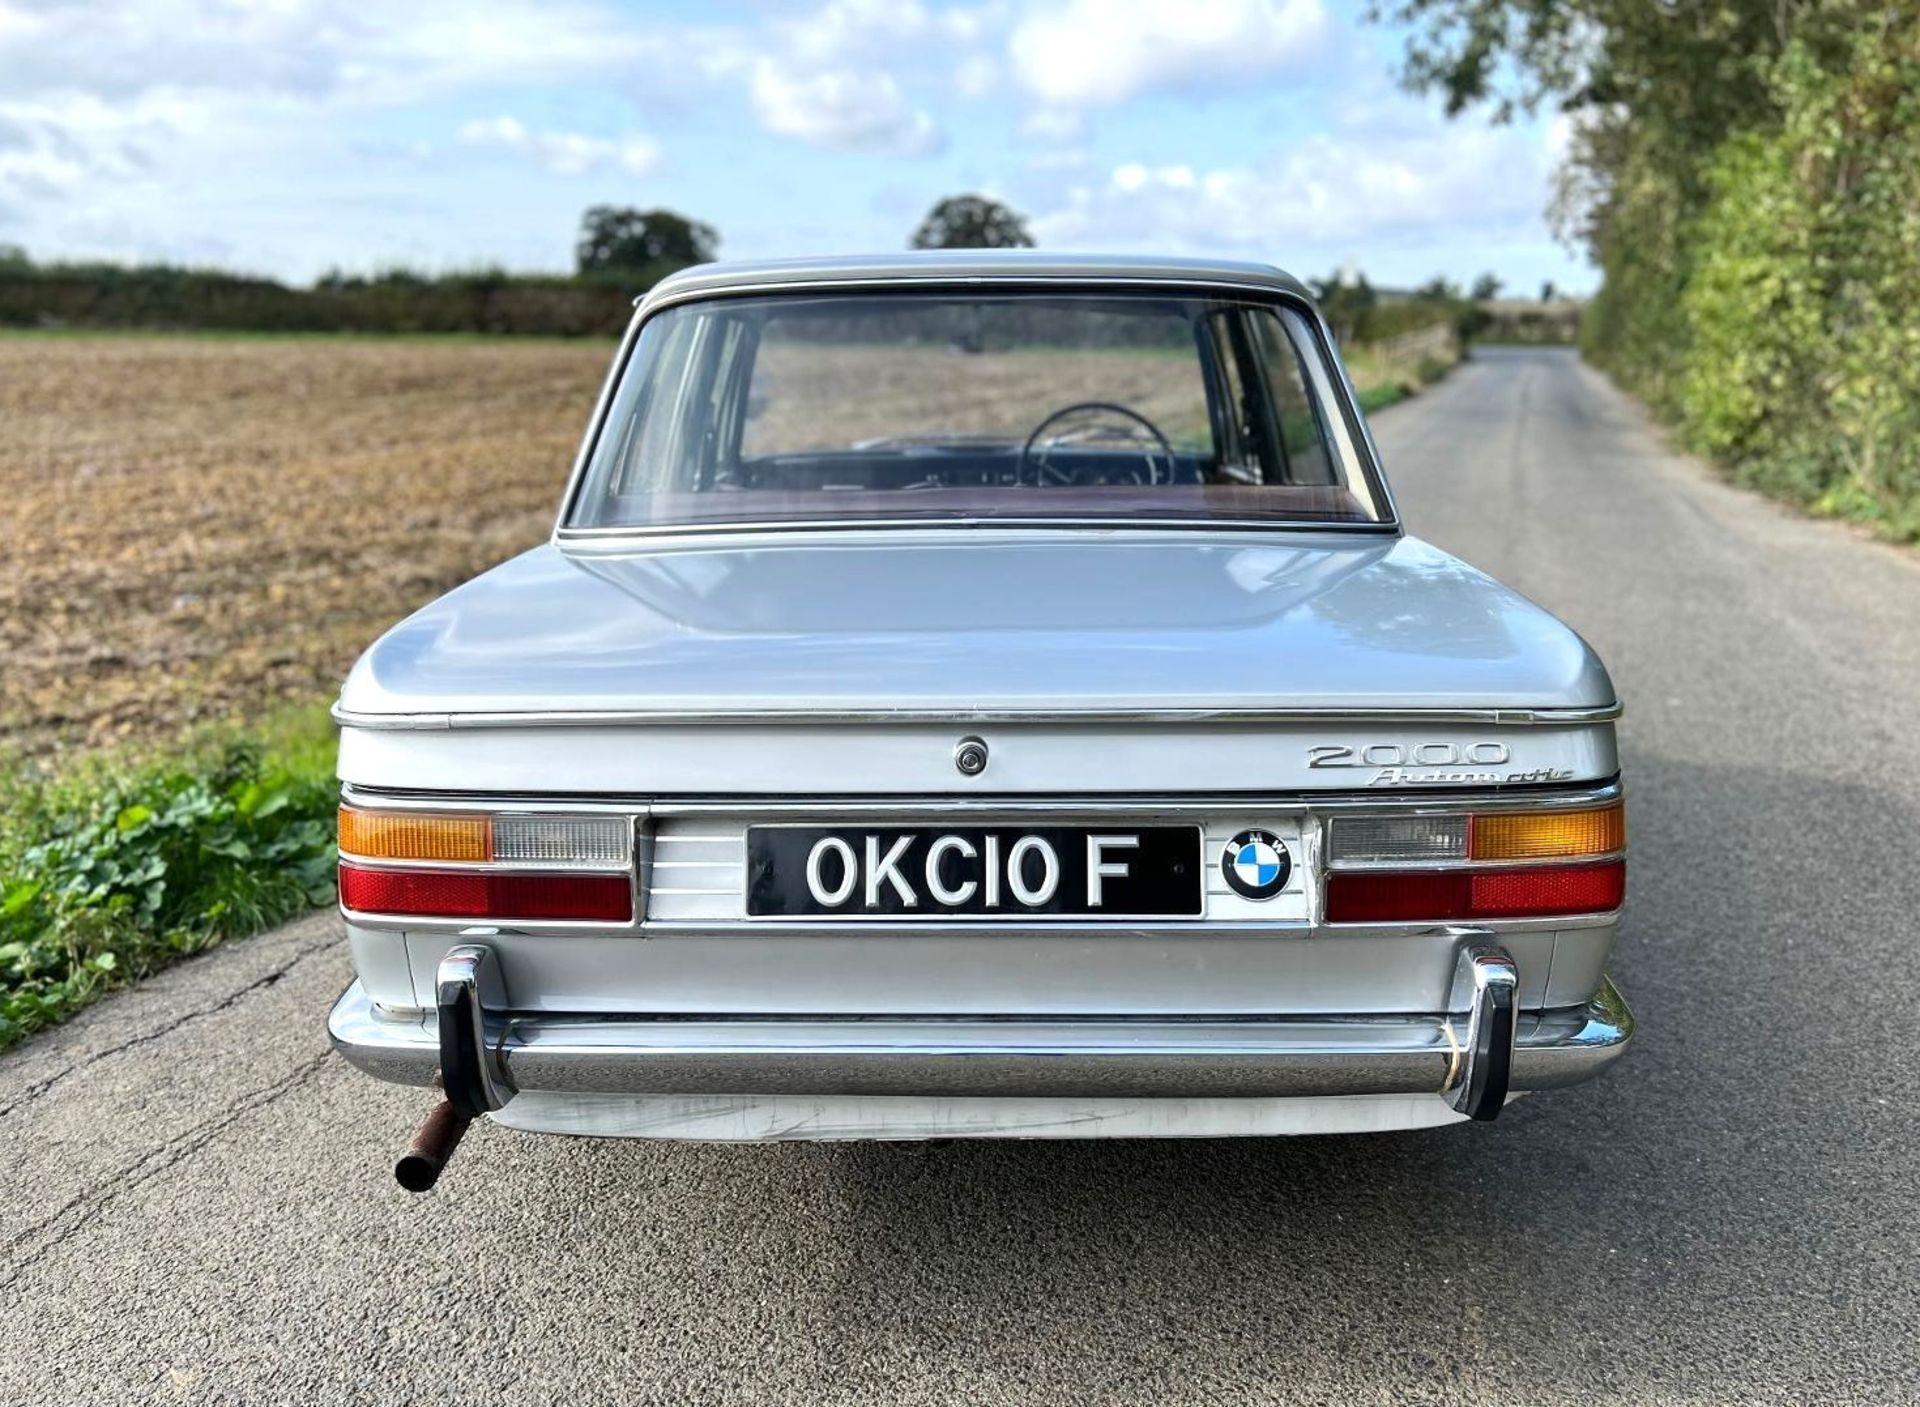 1968 BMW 2000 NEU KLASSE Registration Number: OKC 10F Chassis Number: 1225247 Recorded Mileage: 28, - Image 8 of 18